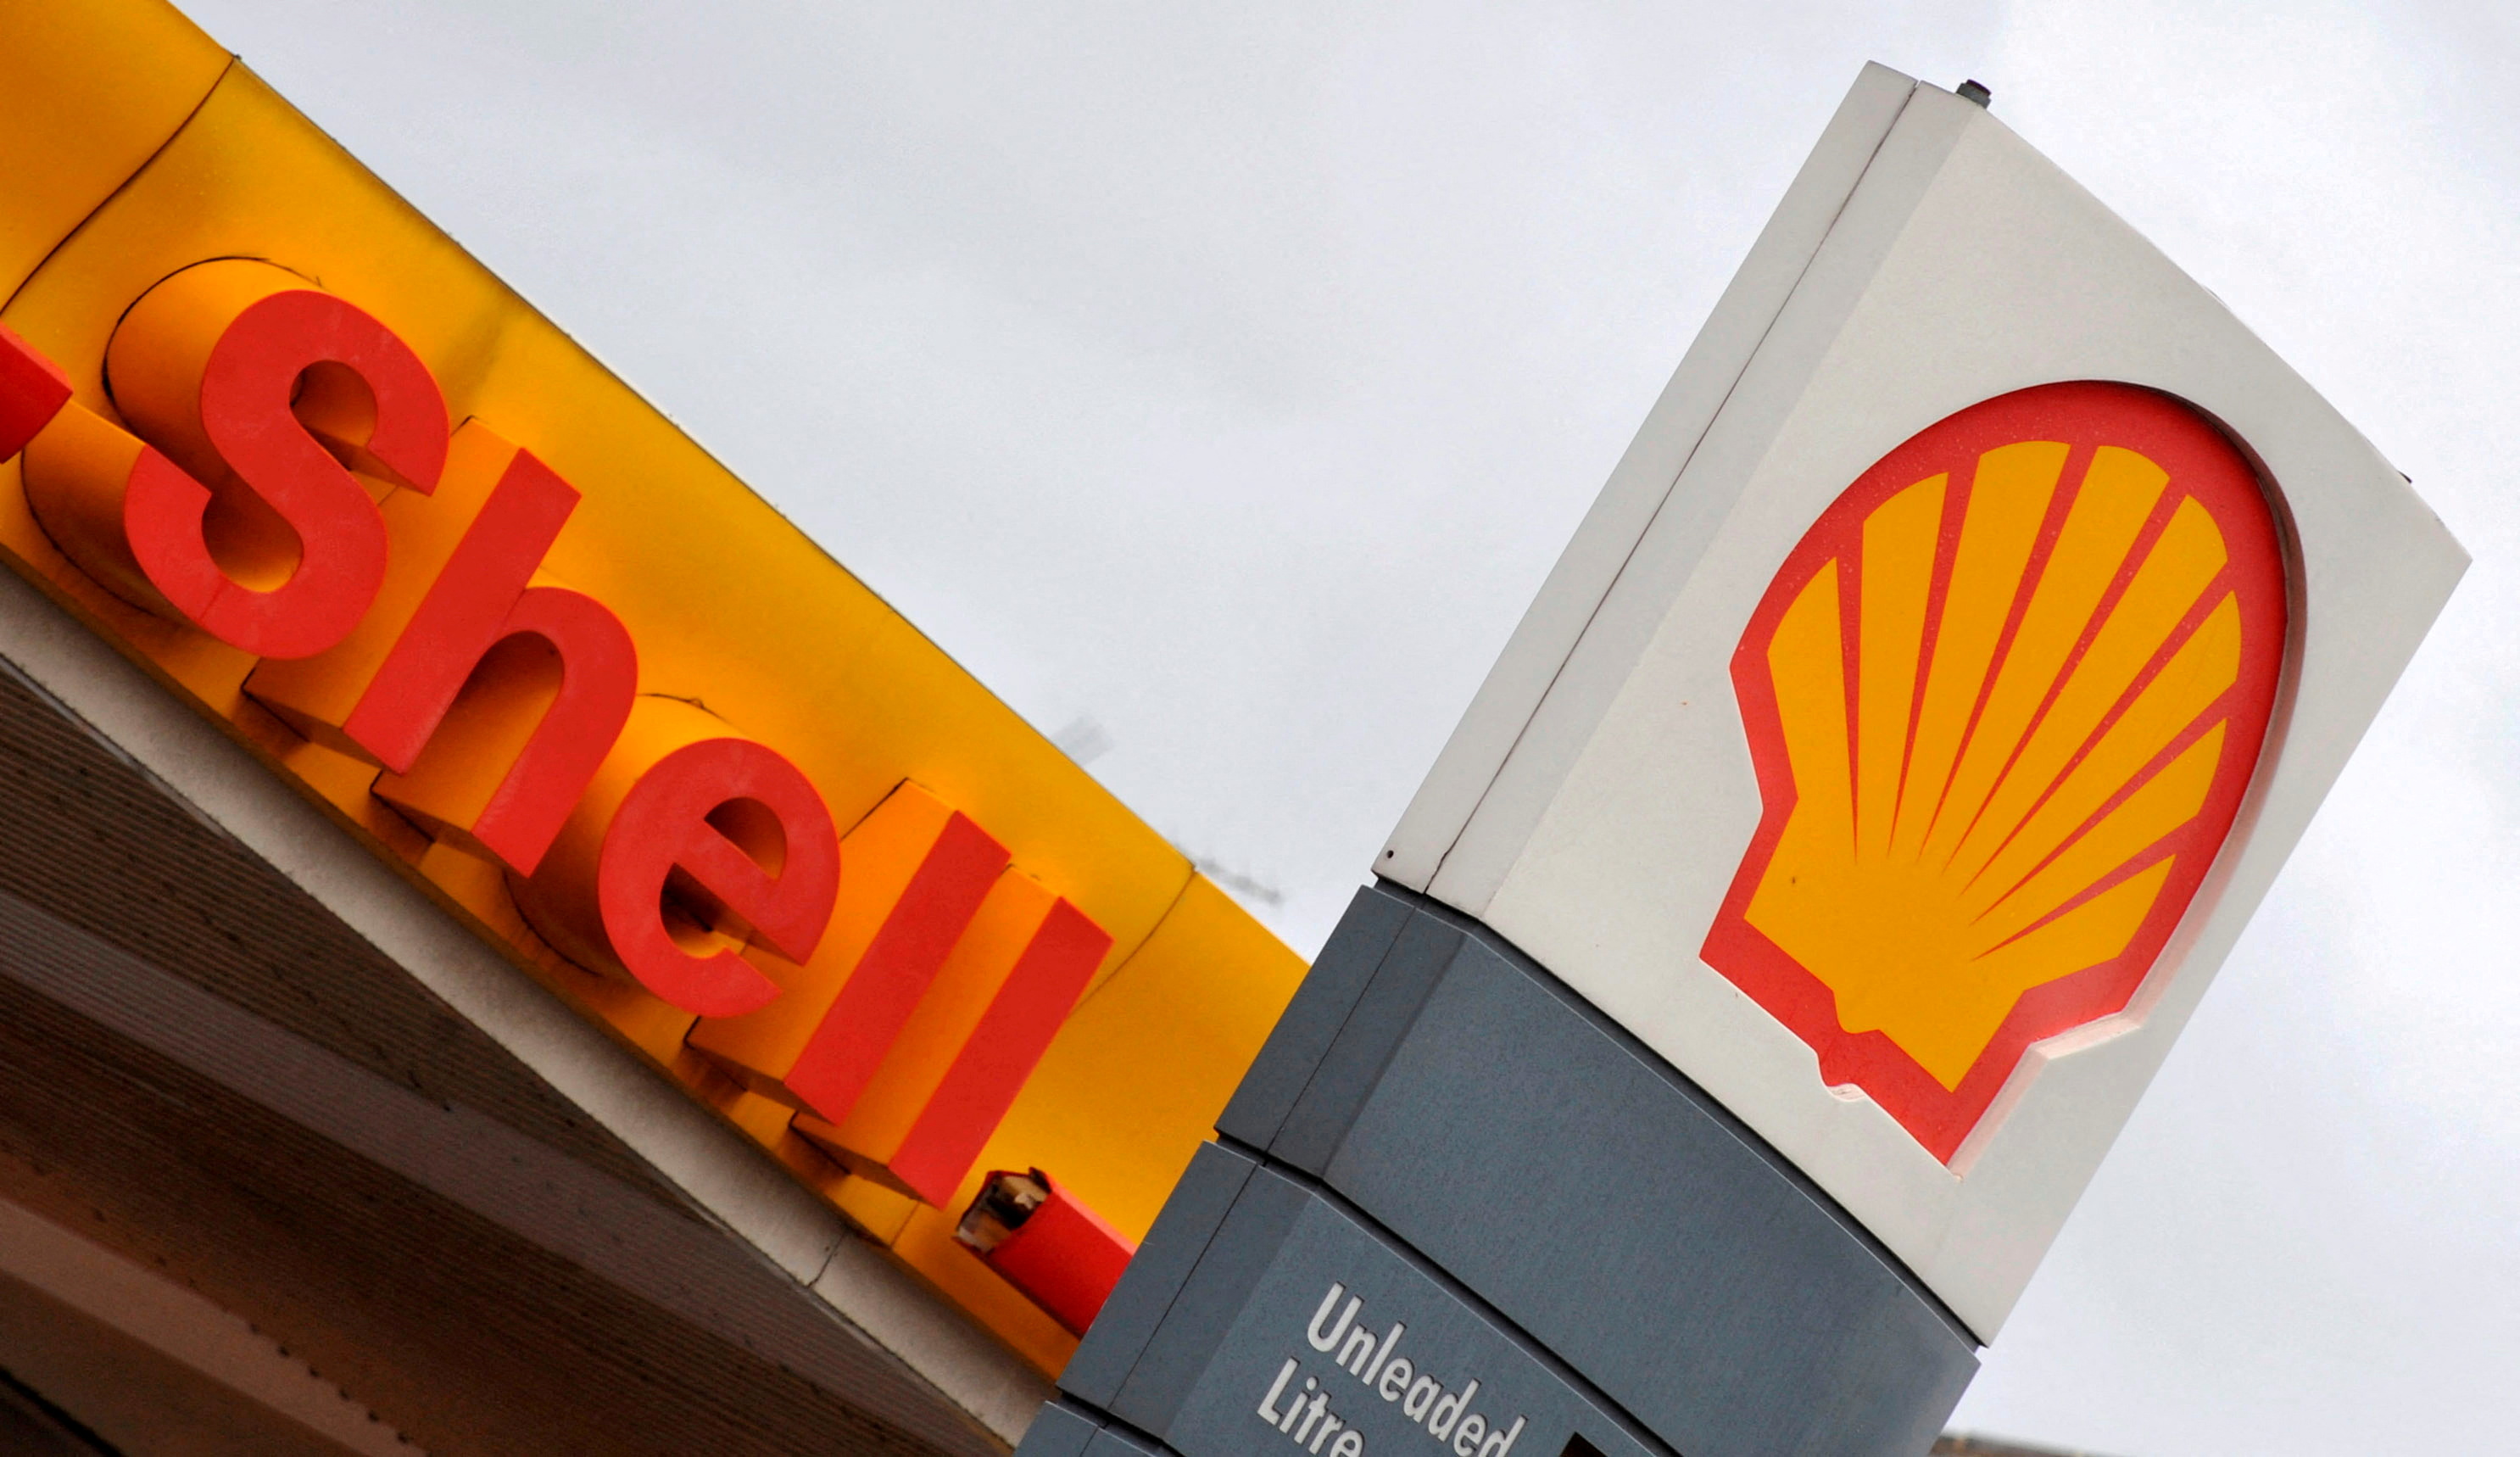 Shell says Tanzania LNG project is making good progress | Reuters